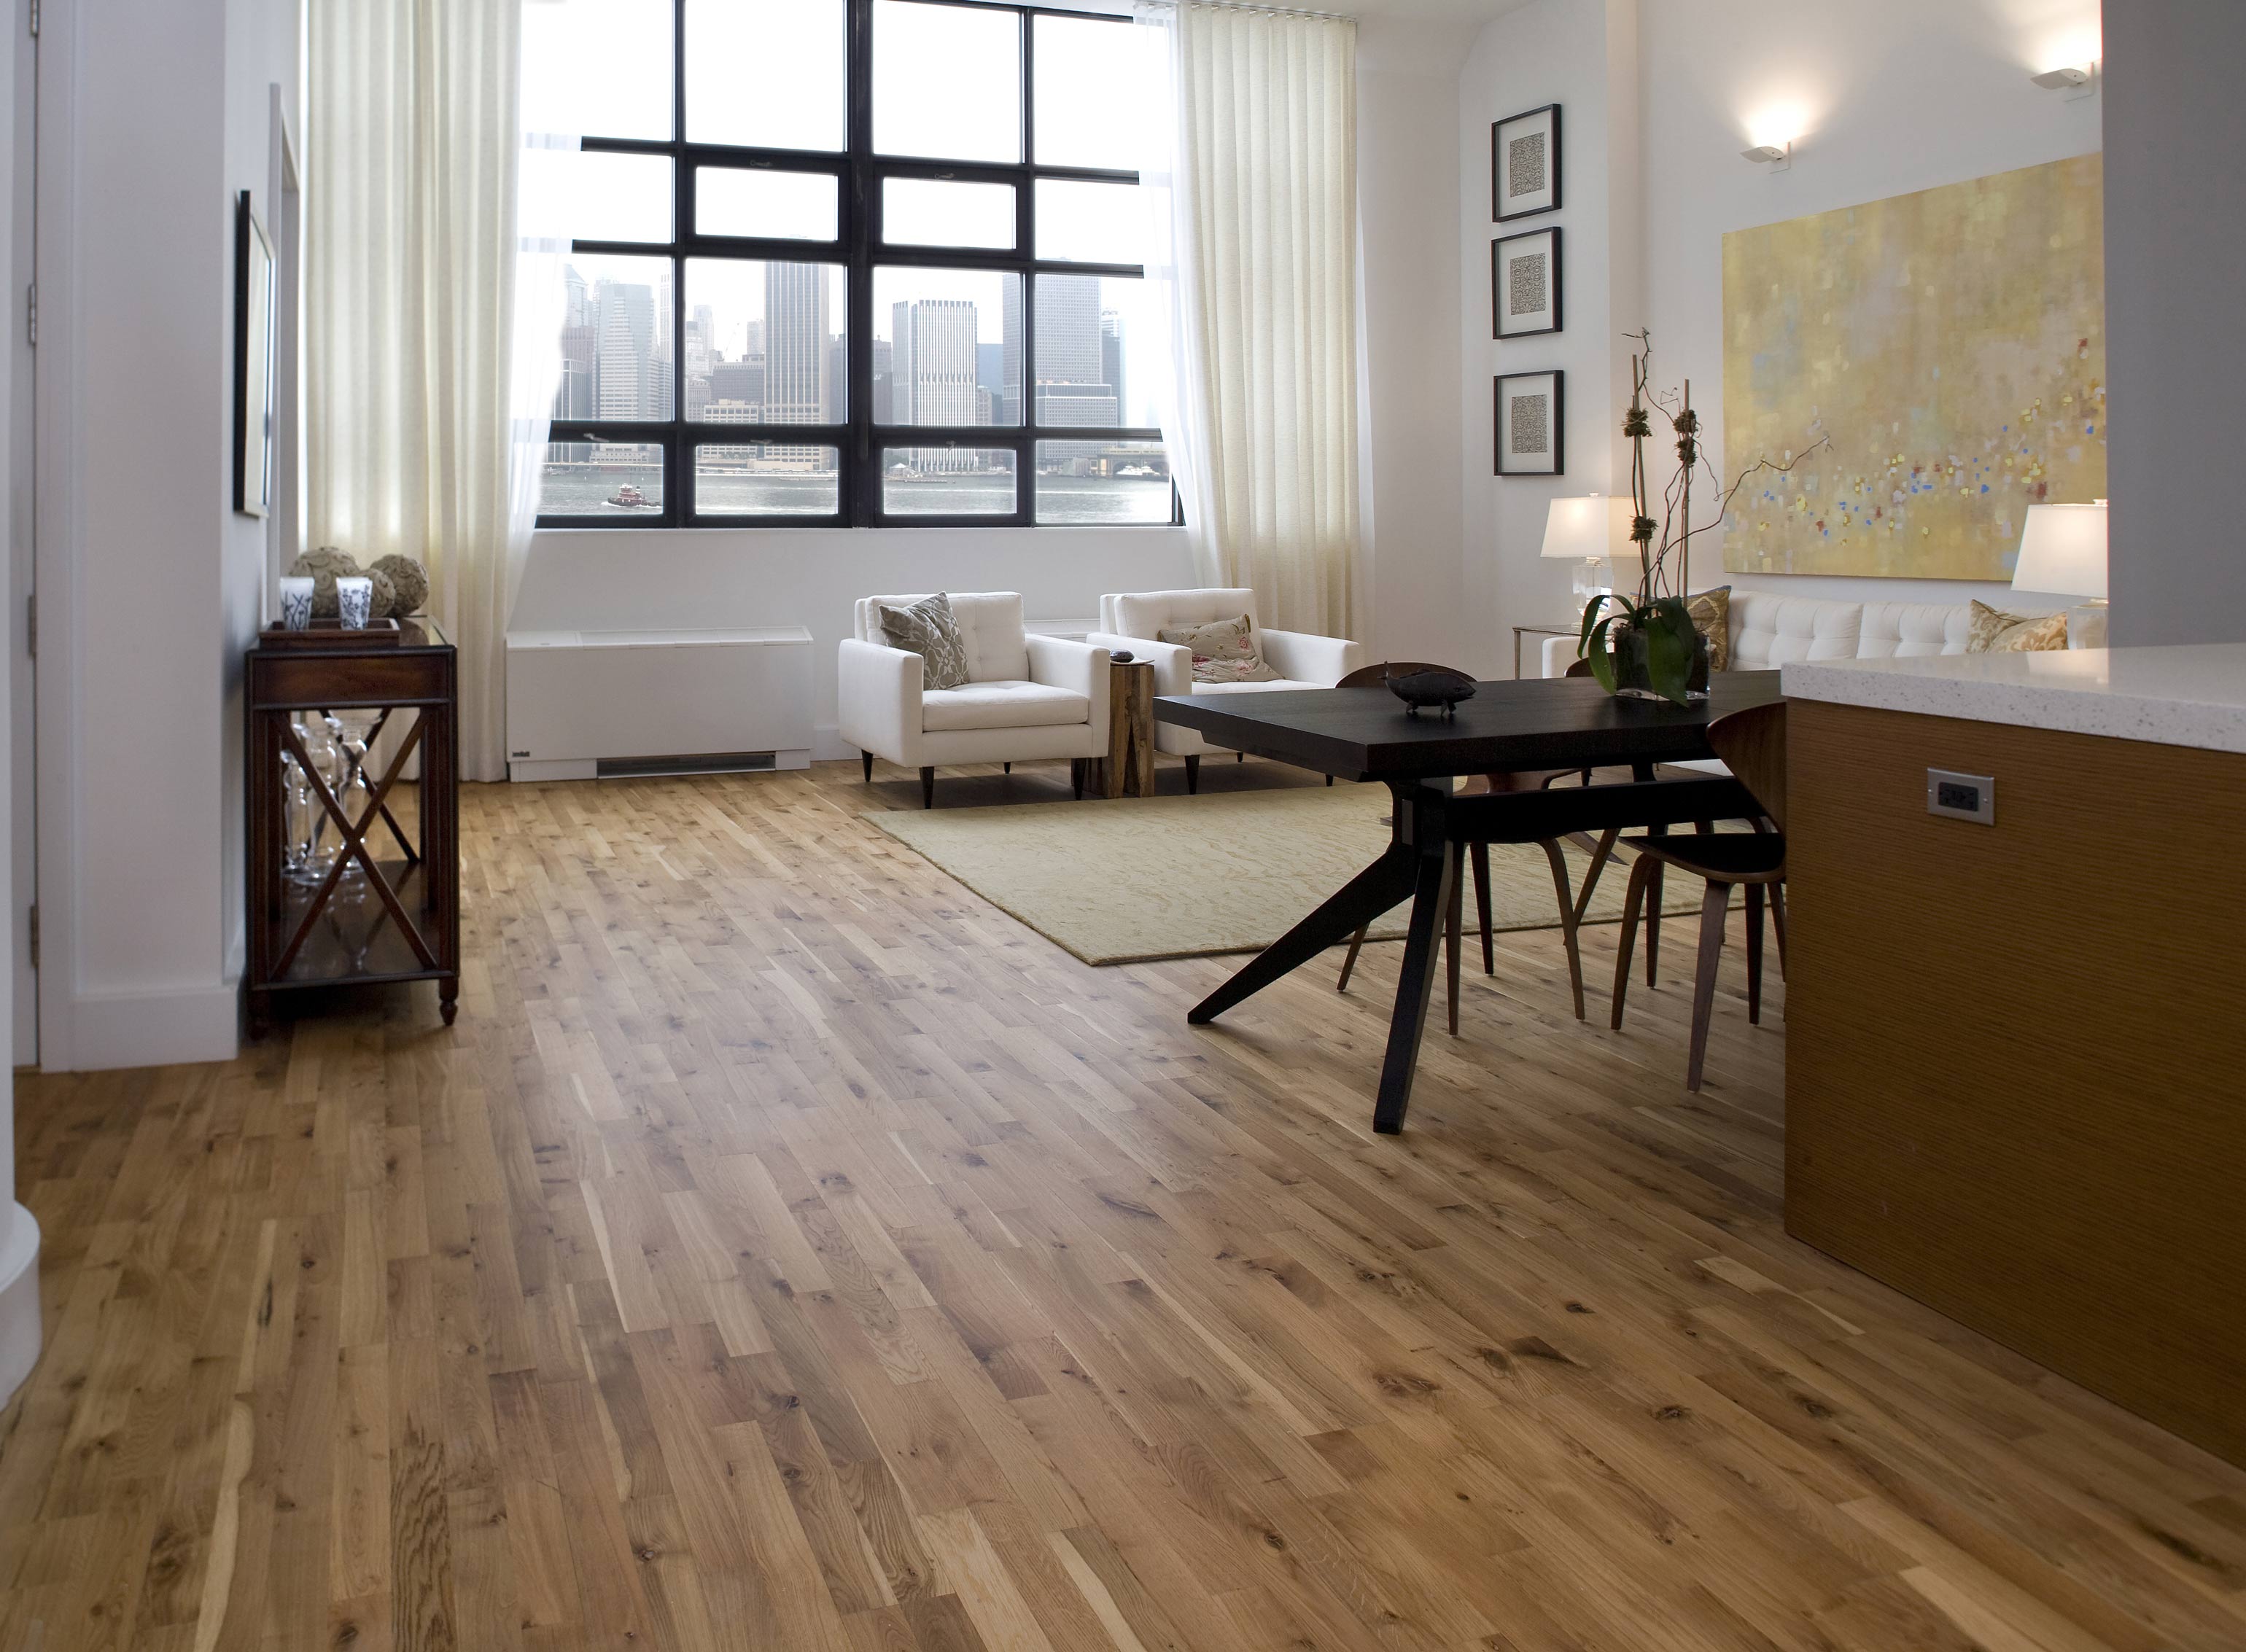 Best Flooring Options for Living Room Roy Home Design